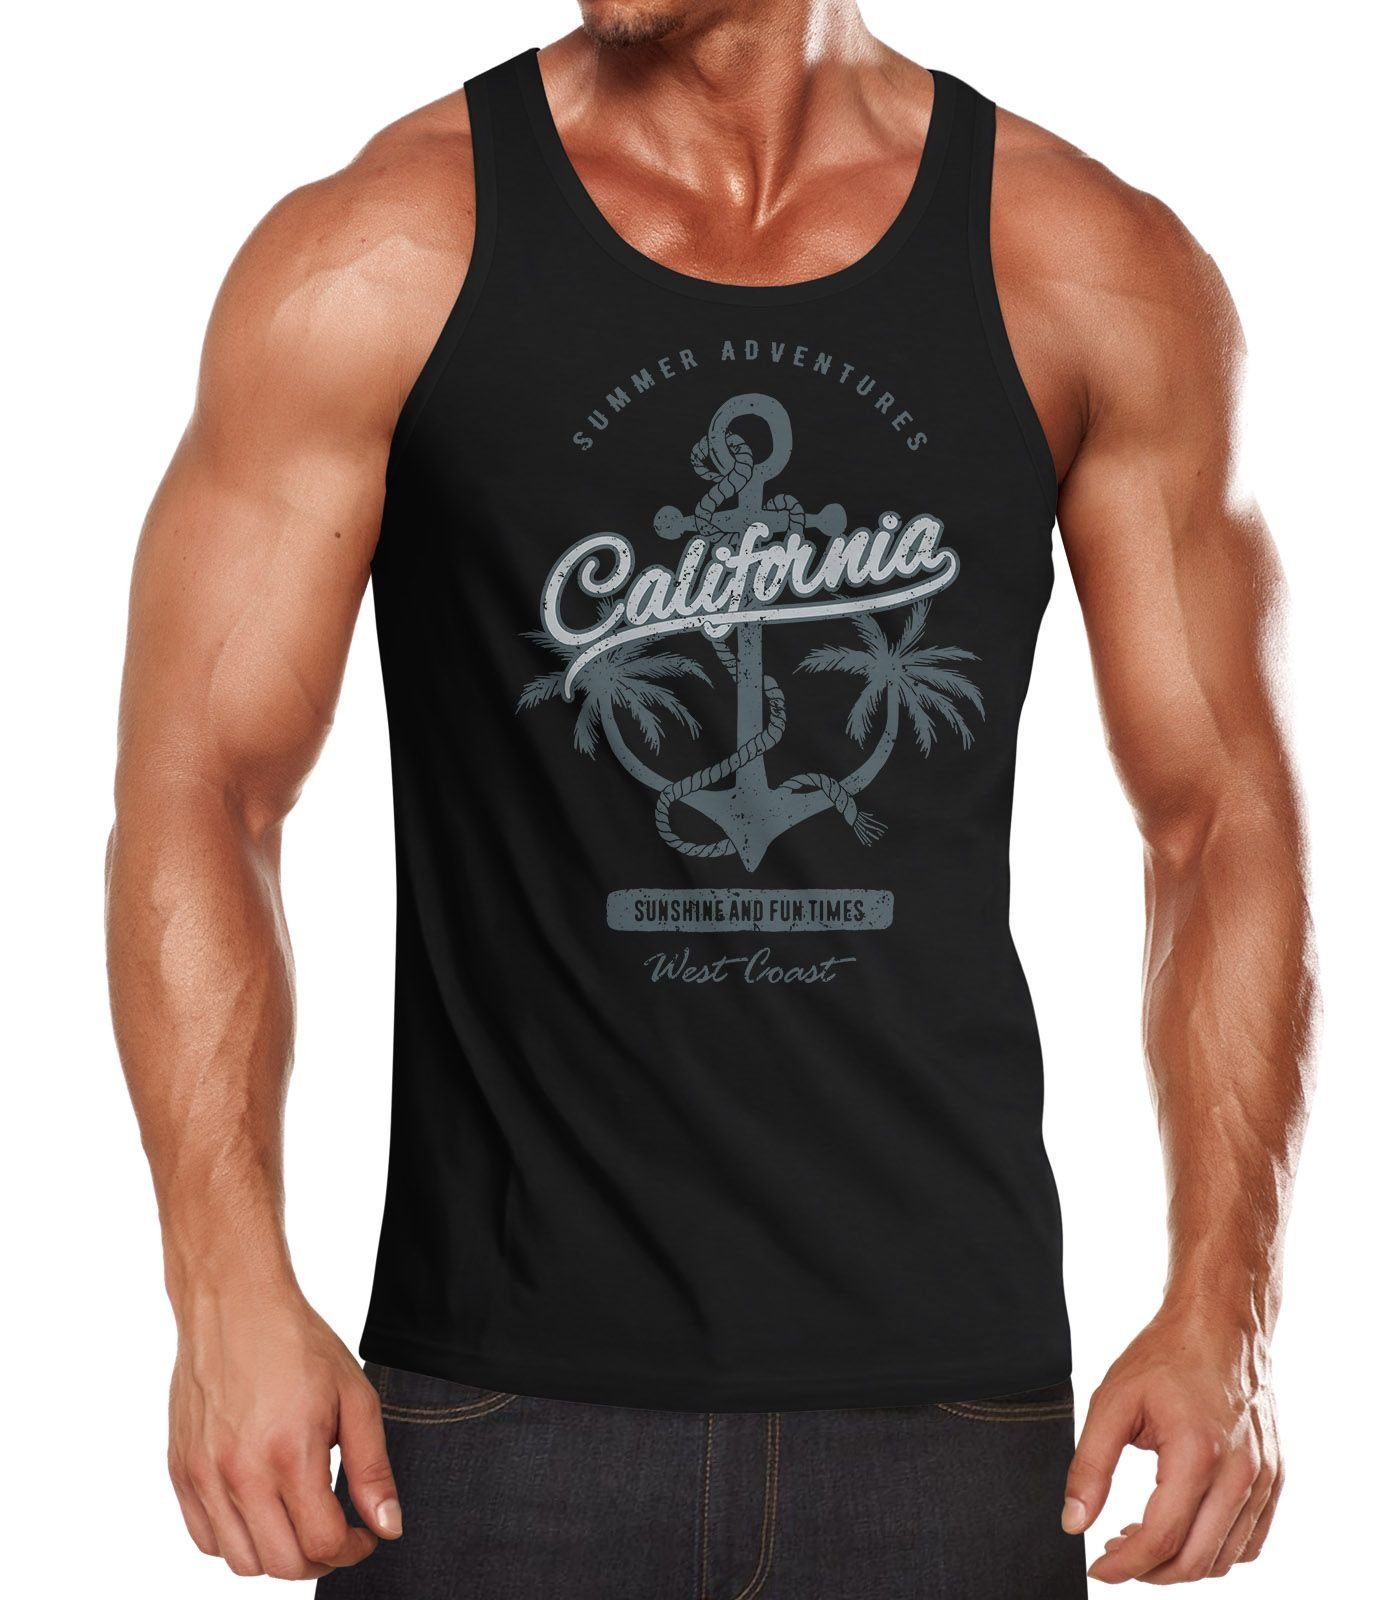 Tanktop Herren Tank-Top Anker Palmen Anchor Palms Muskelshirt Muscle Shirt Slim Fit Baumwolle Neverless® mit Print